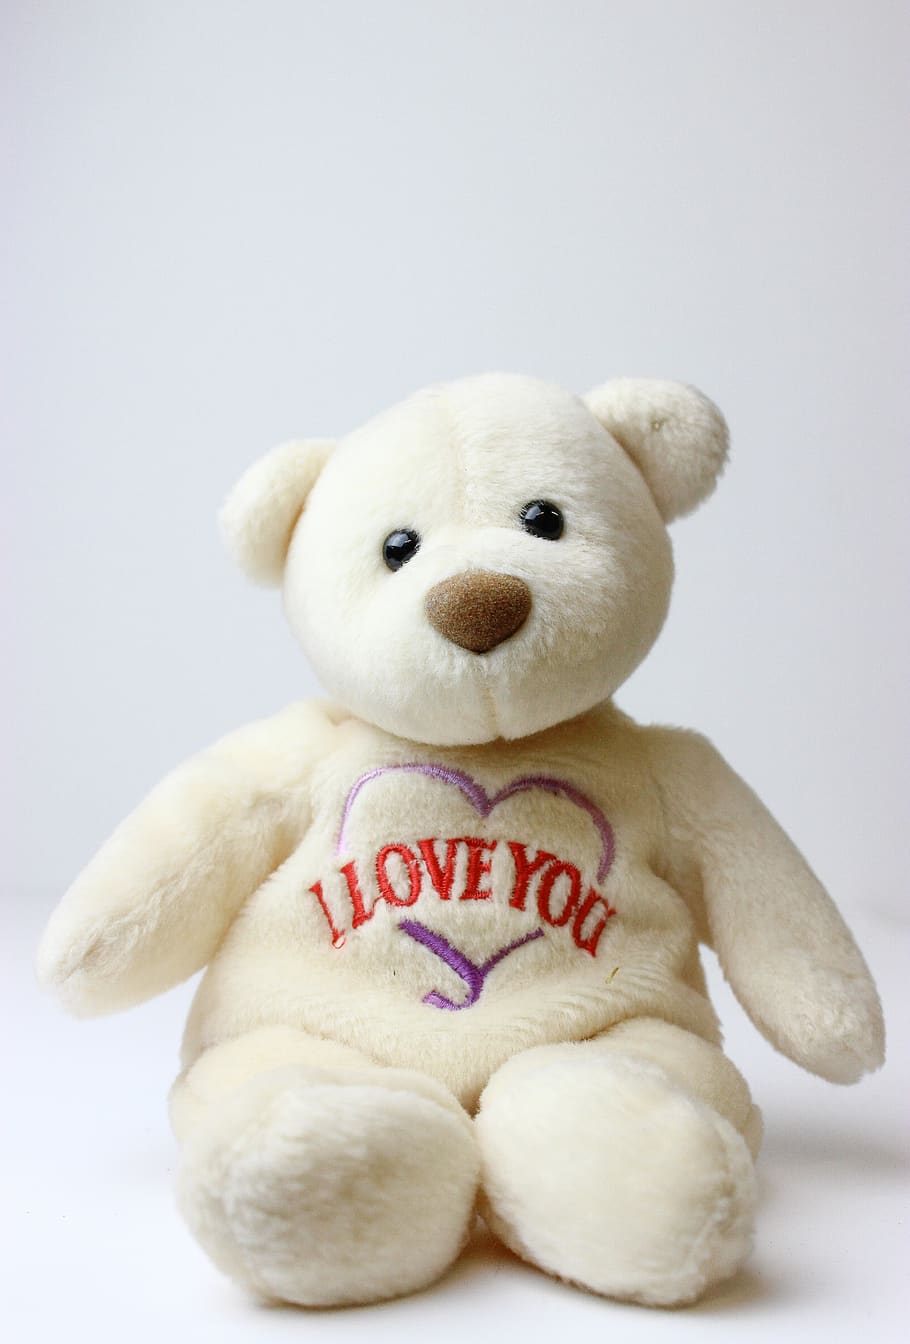 boneka beruang, beanie baby, beruang, aku mencintaimu, boneka, beanie, manis sekali, putih, lucu, mainan mewah